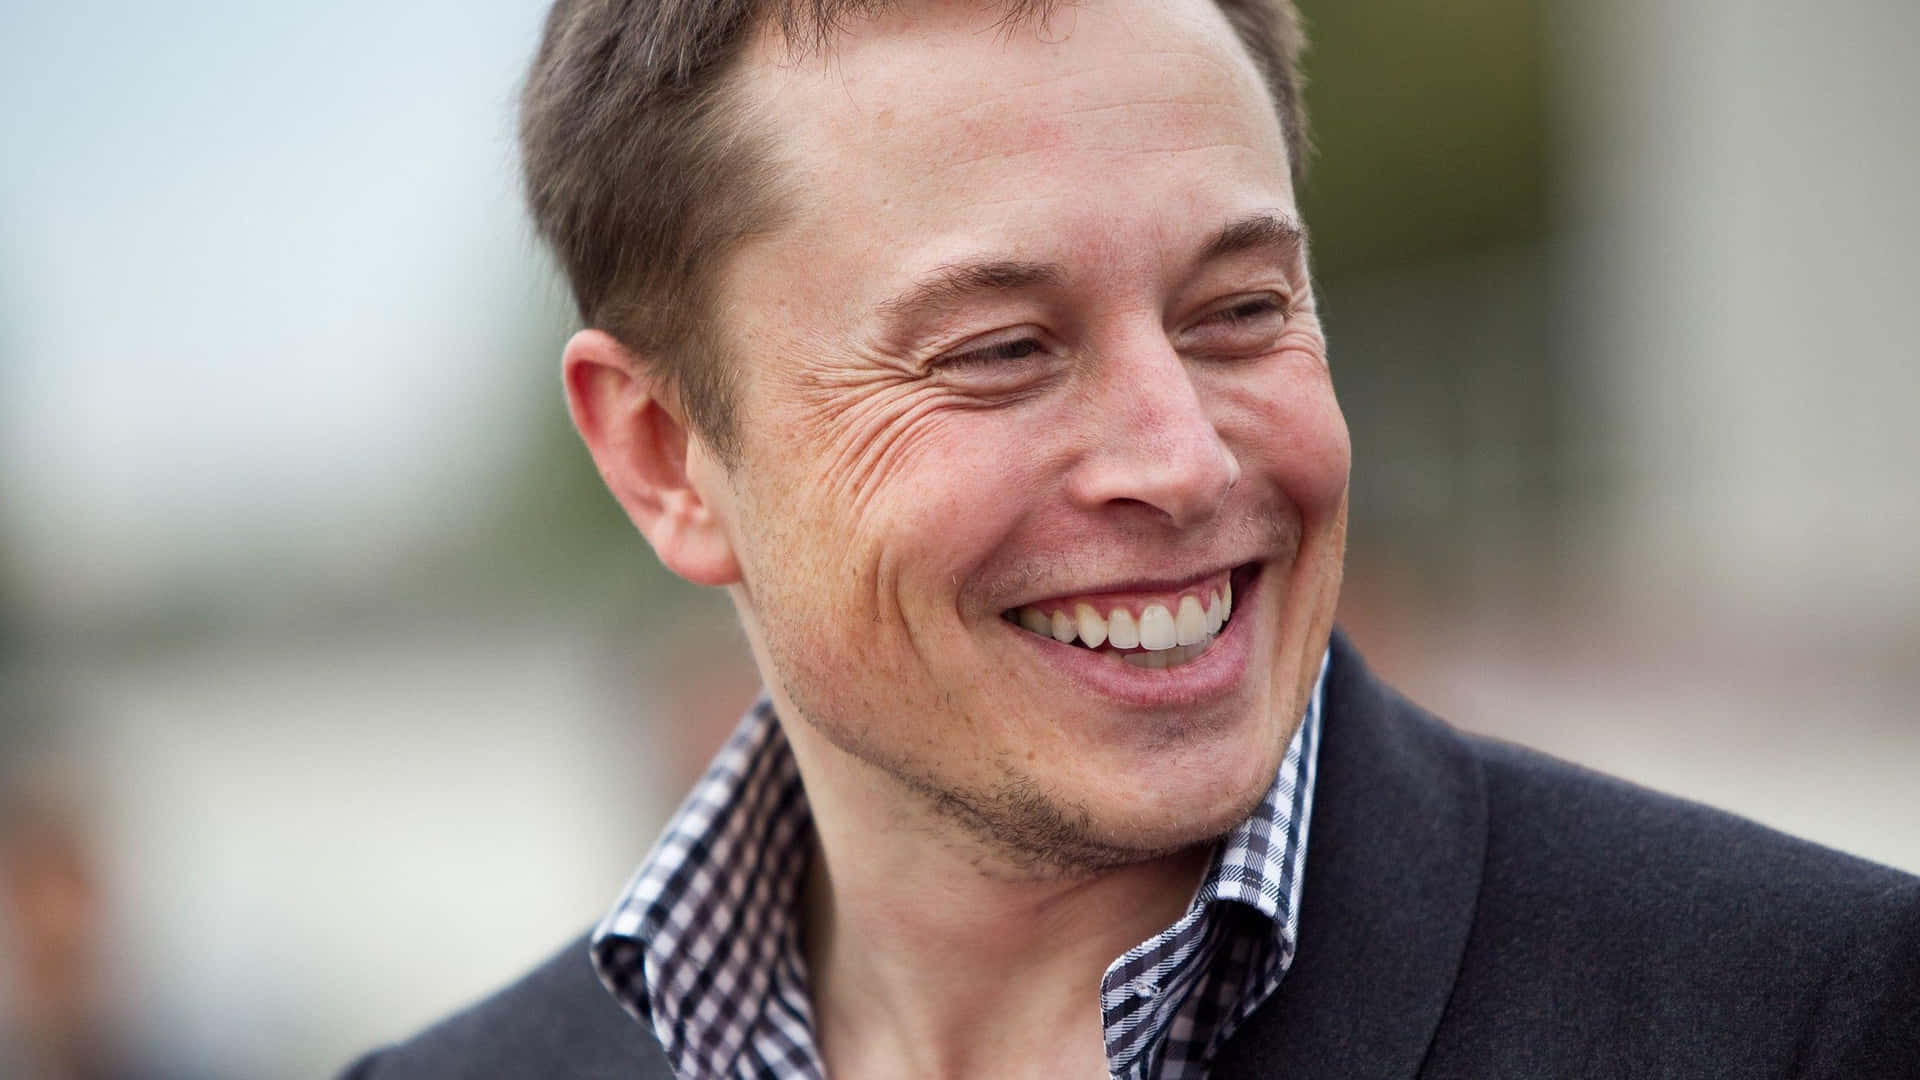 "Elon Musk inspiring everyone to shoot for success"